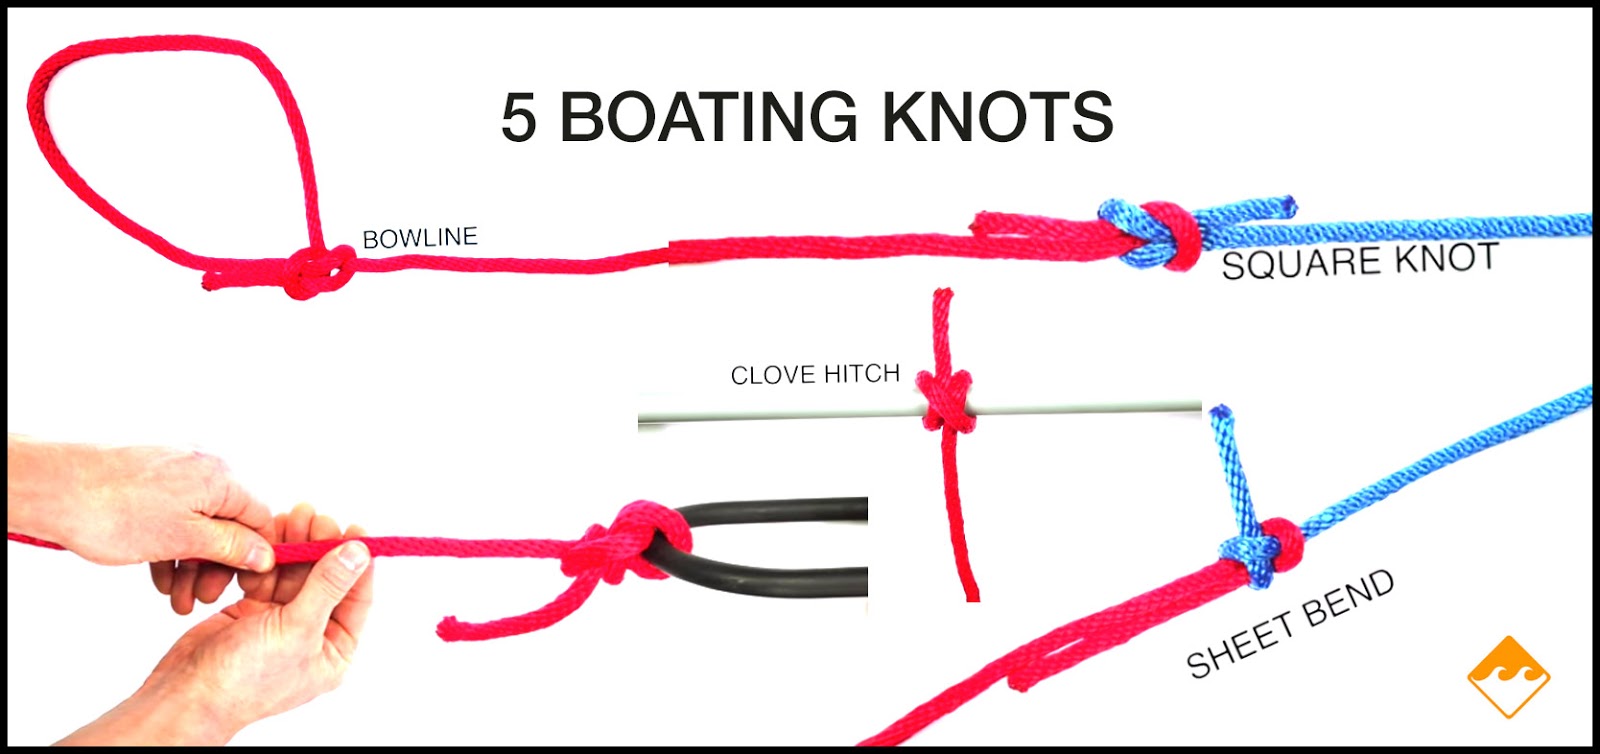 https://www.boat-ed.com/blog/media/posts/24/boat-knots-2.jpeg